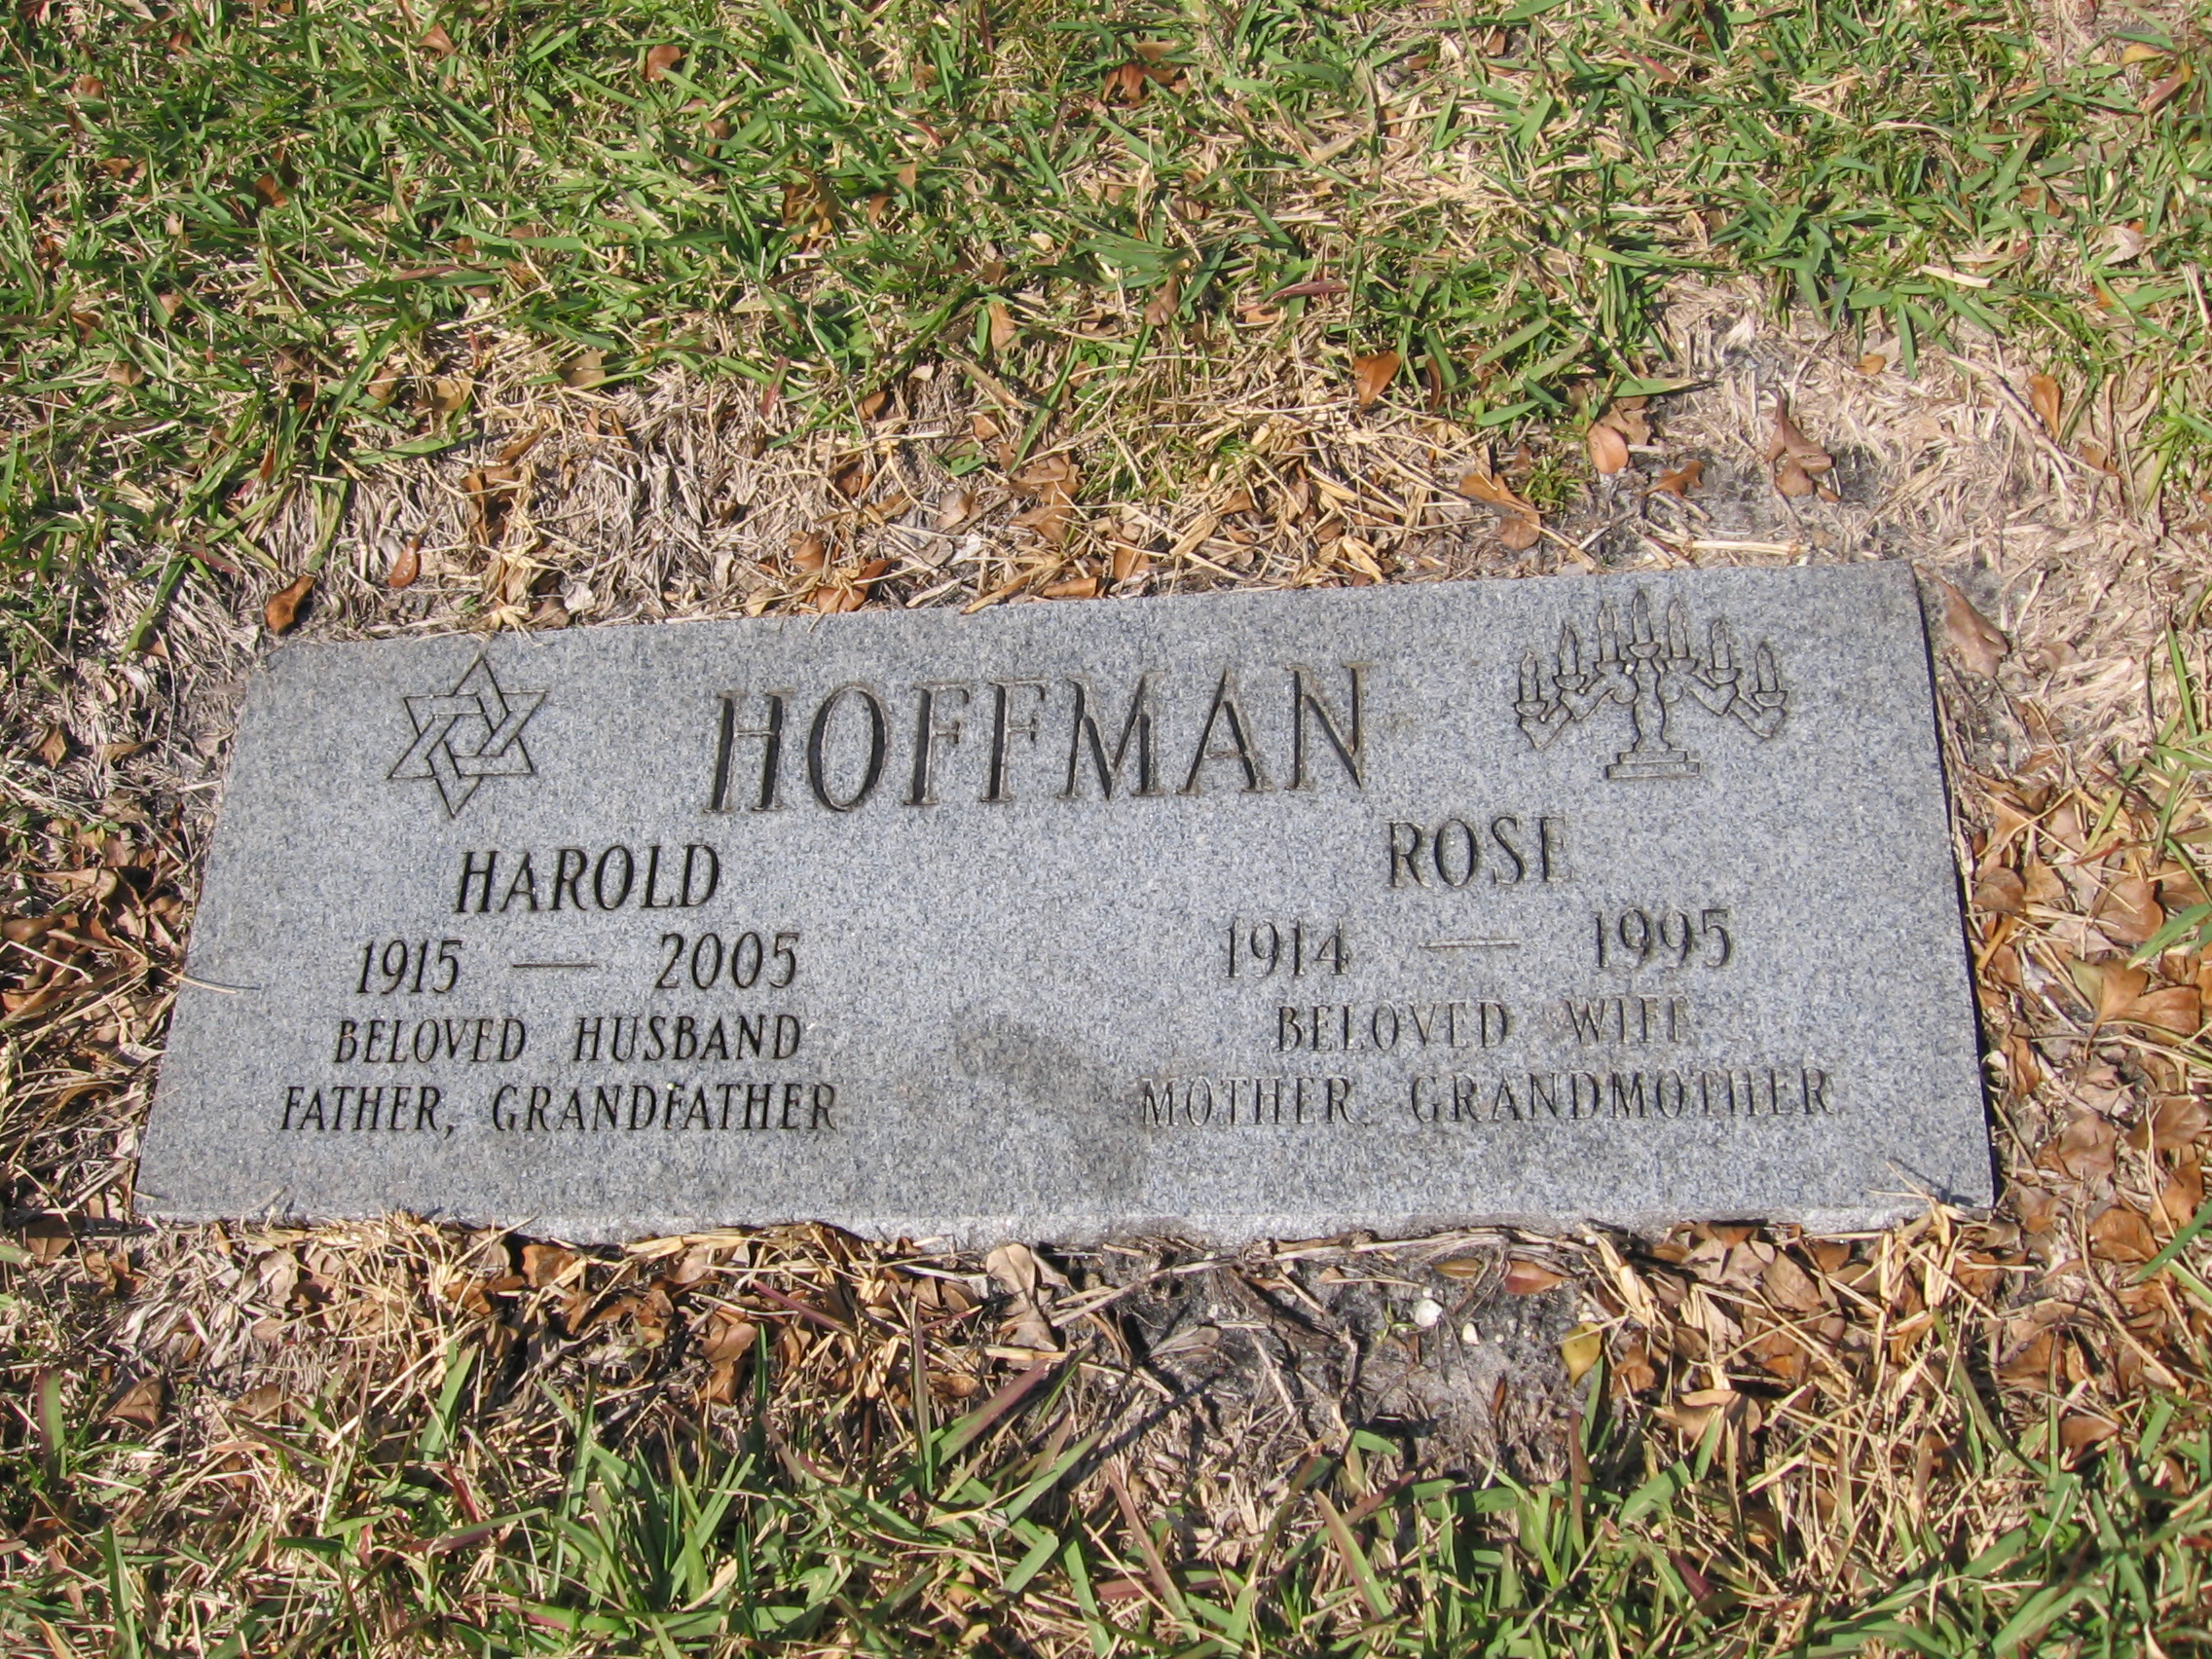 Rose Hoffman